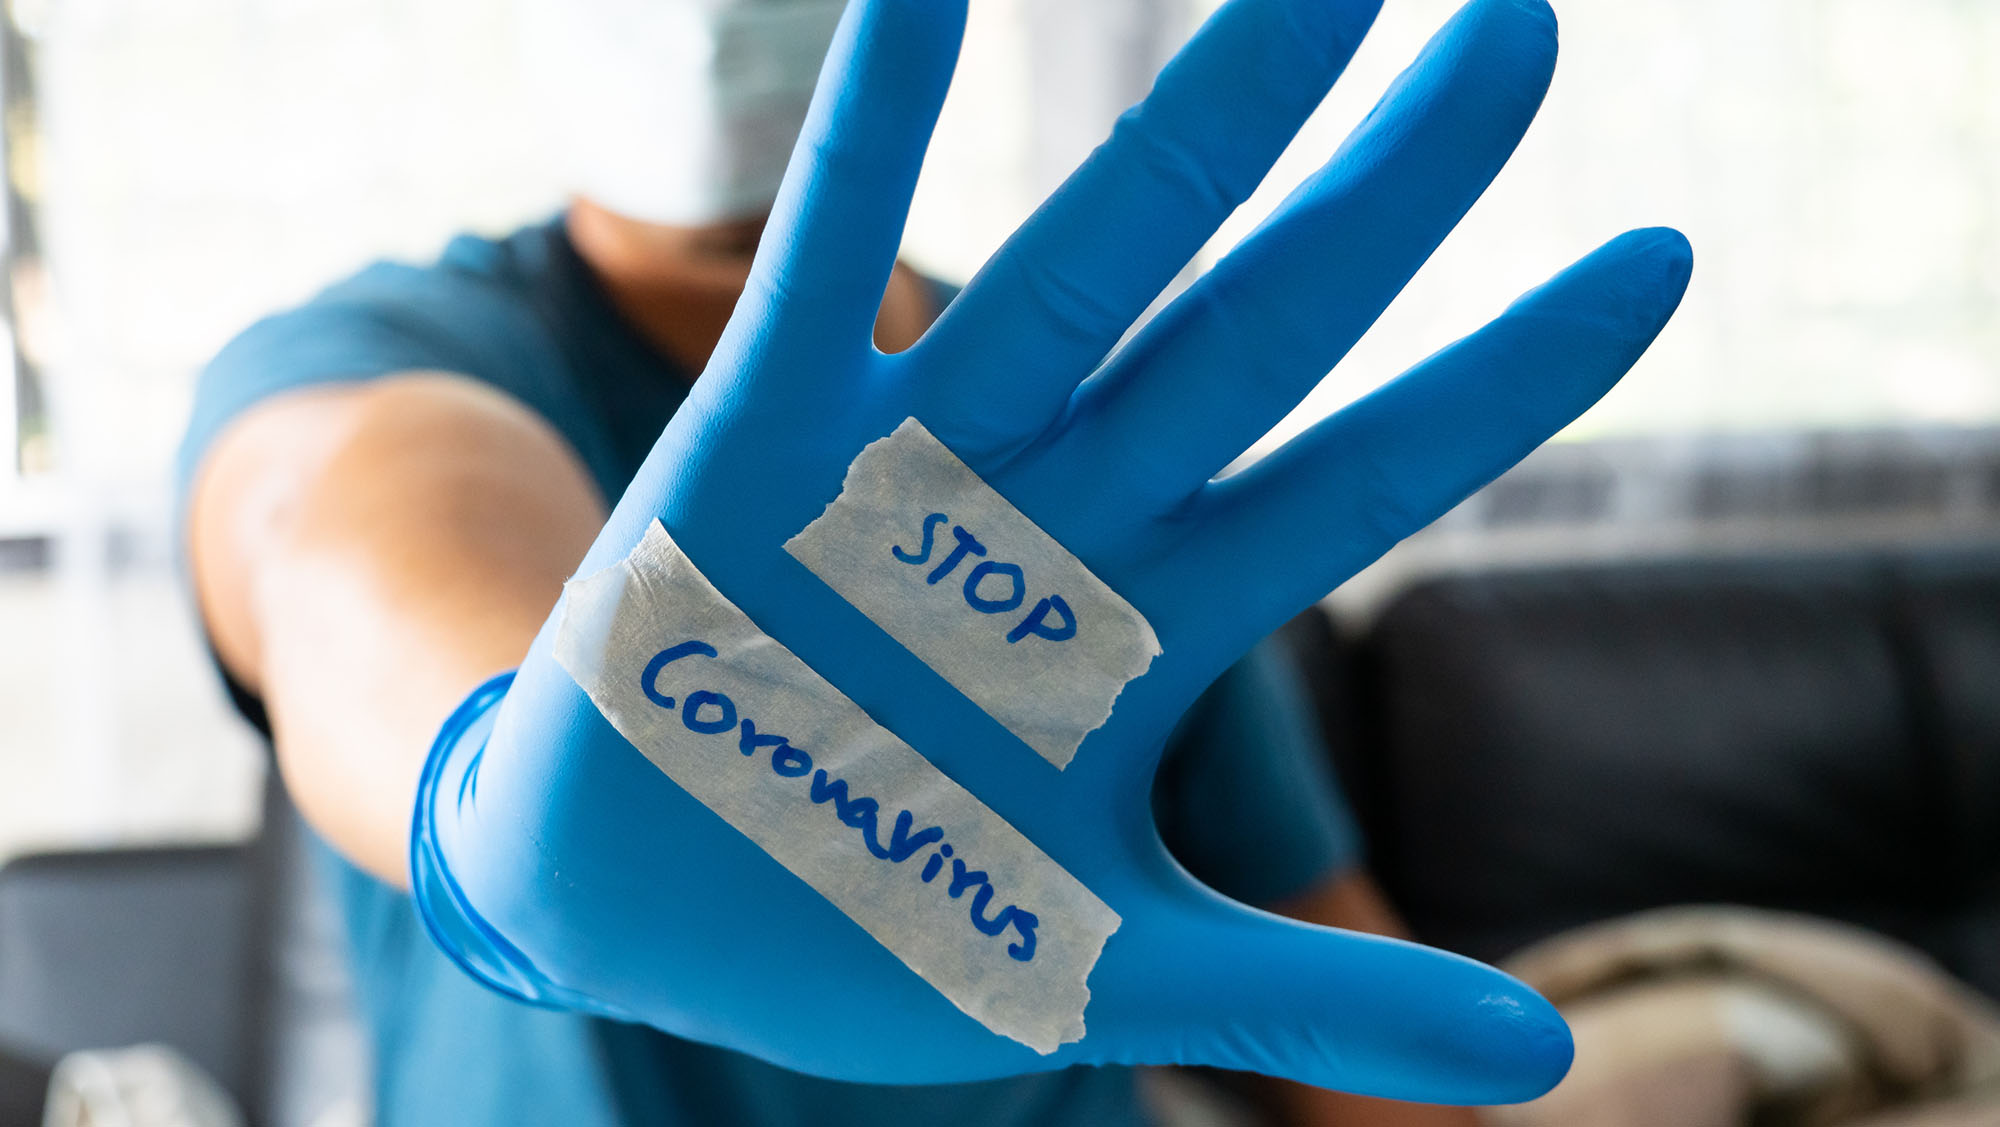 Stop coronavirus message on a gloved hand